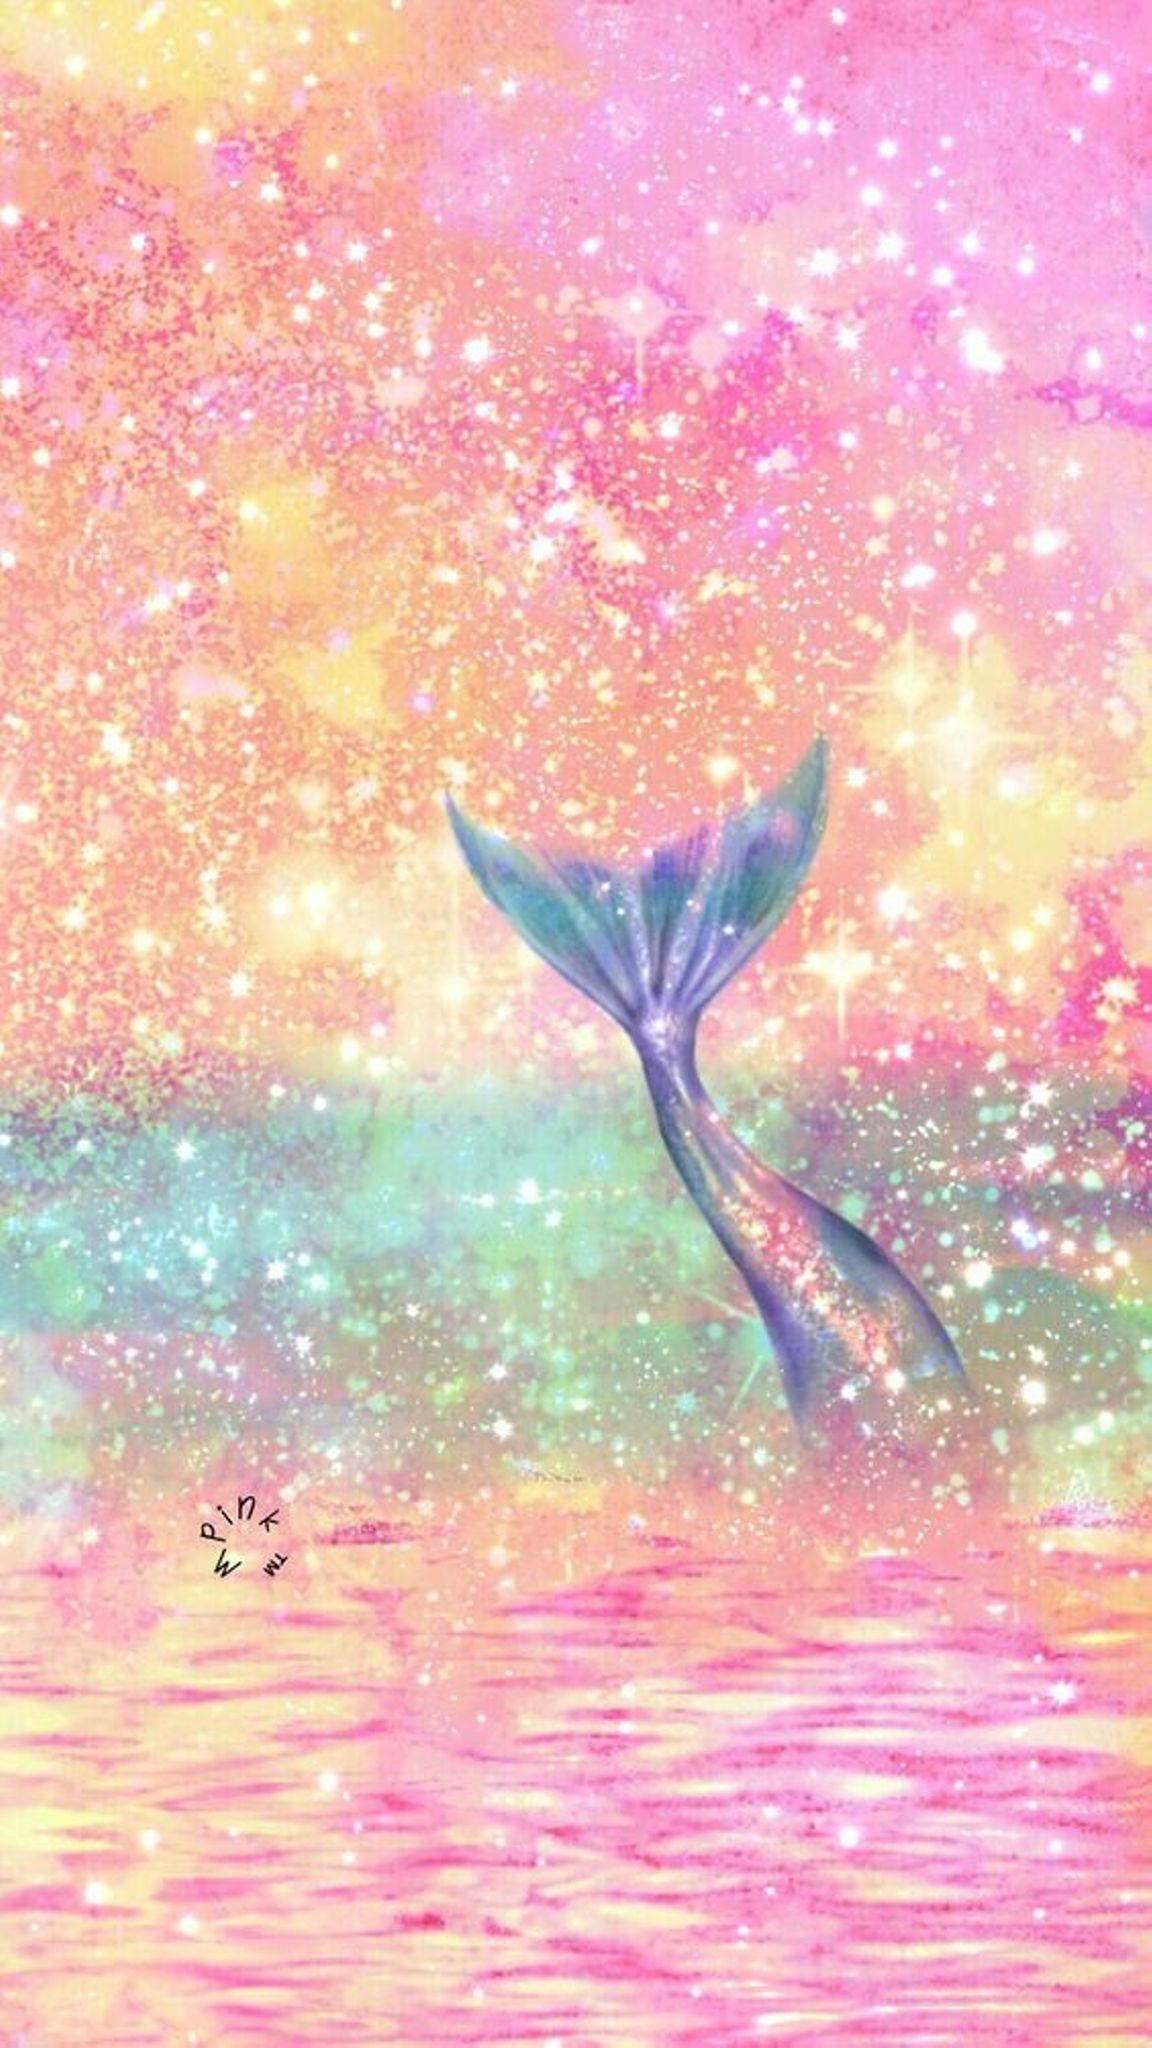 meerjungfrau wallpaper für iphone,rosa,lila,himmel,pflanze,illustration